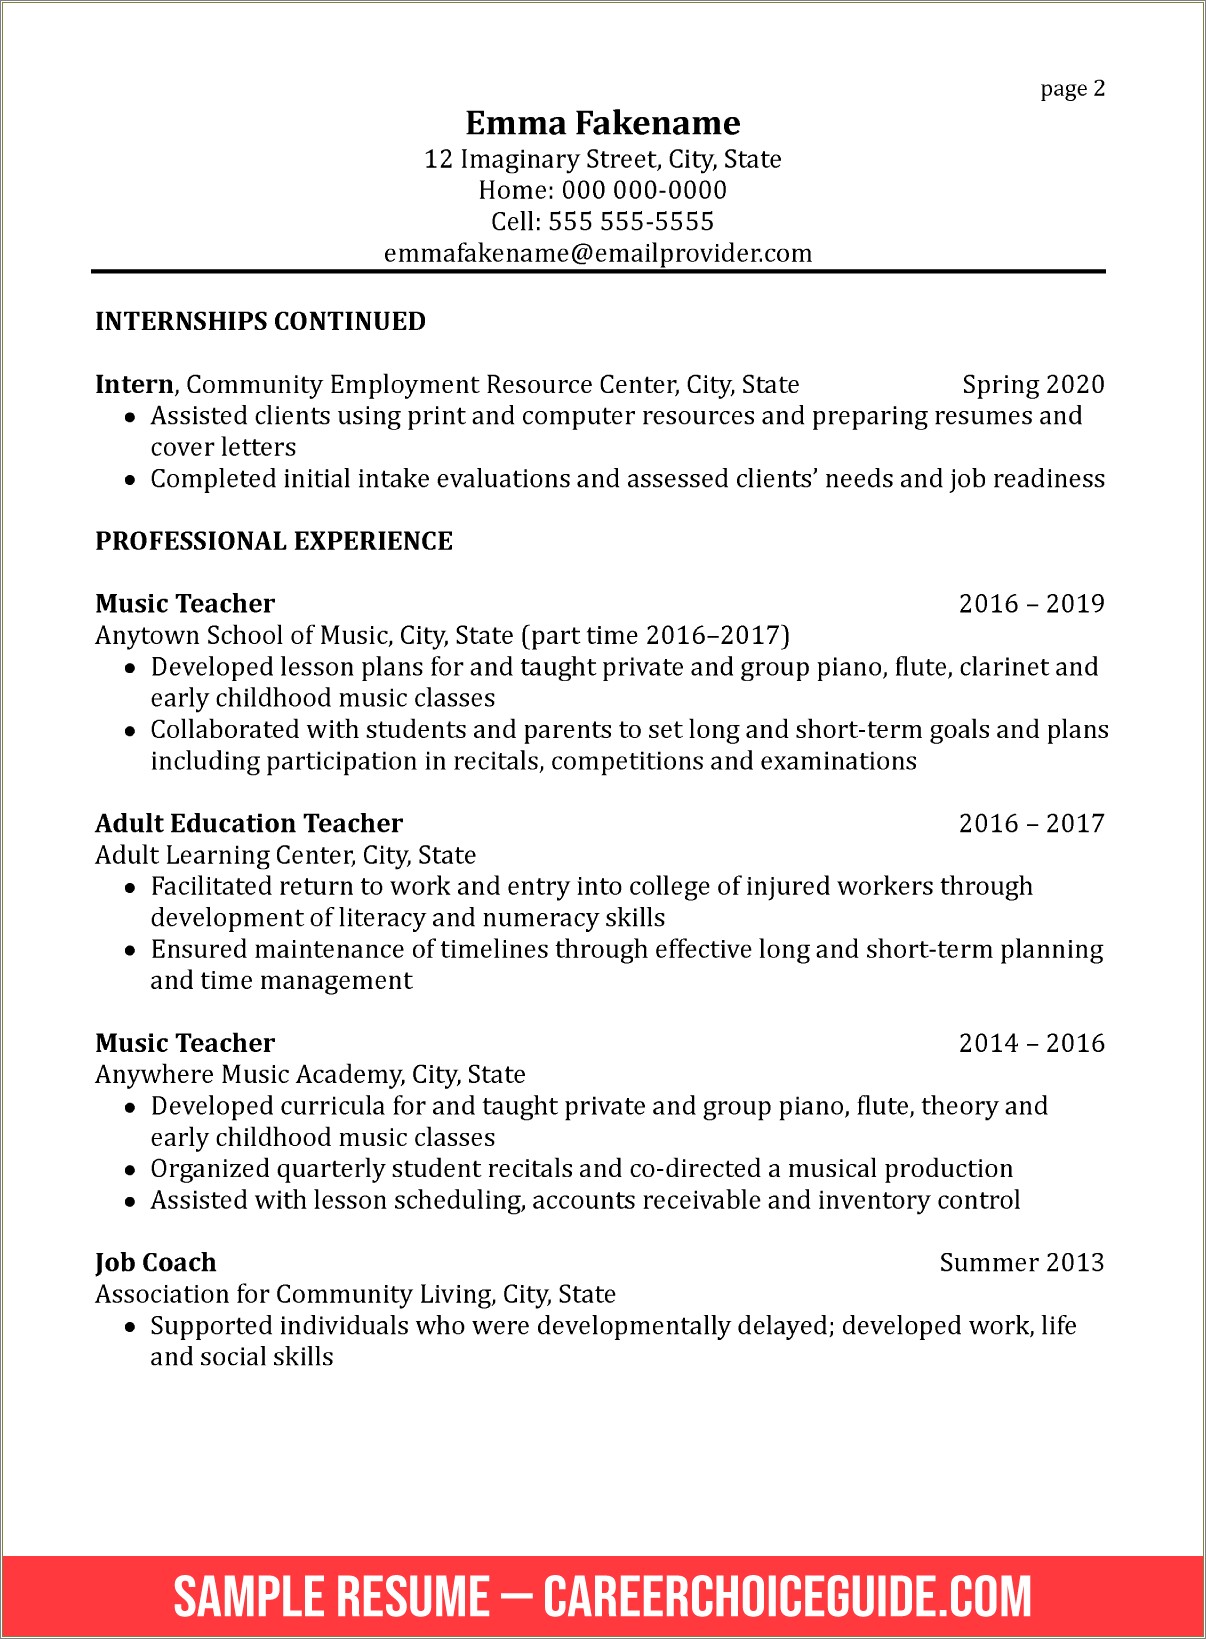 Sample Resume For Change In Career Template